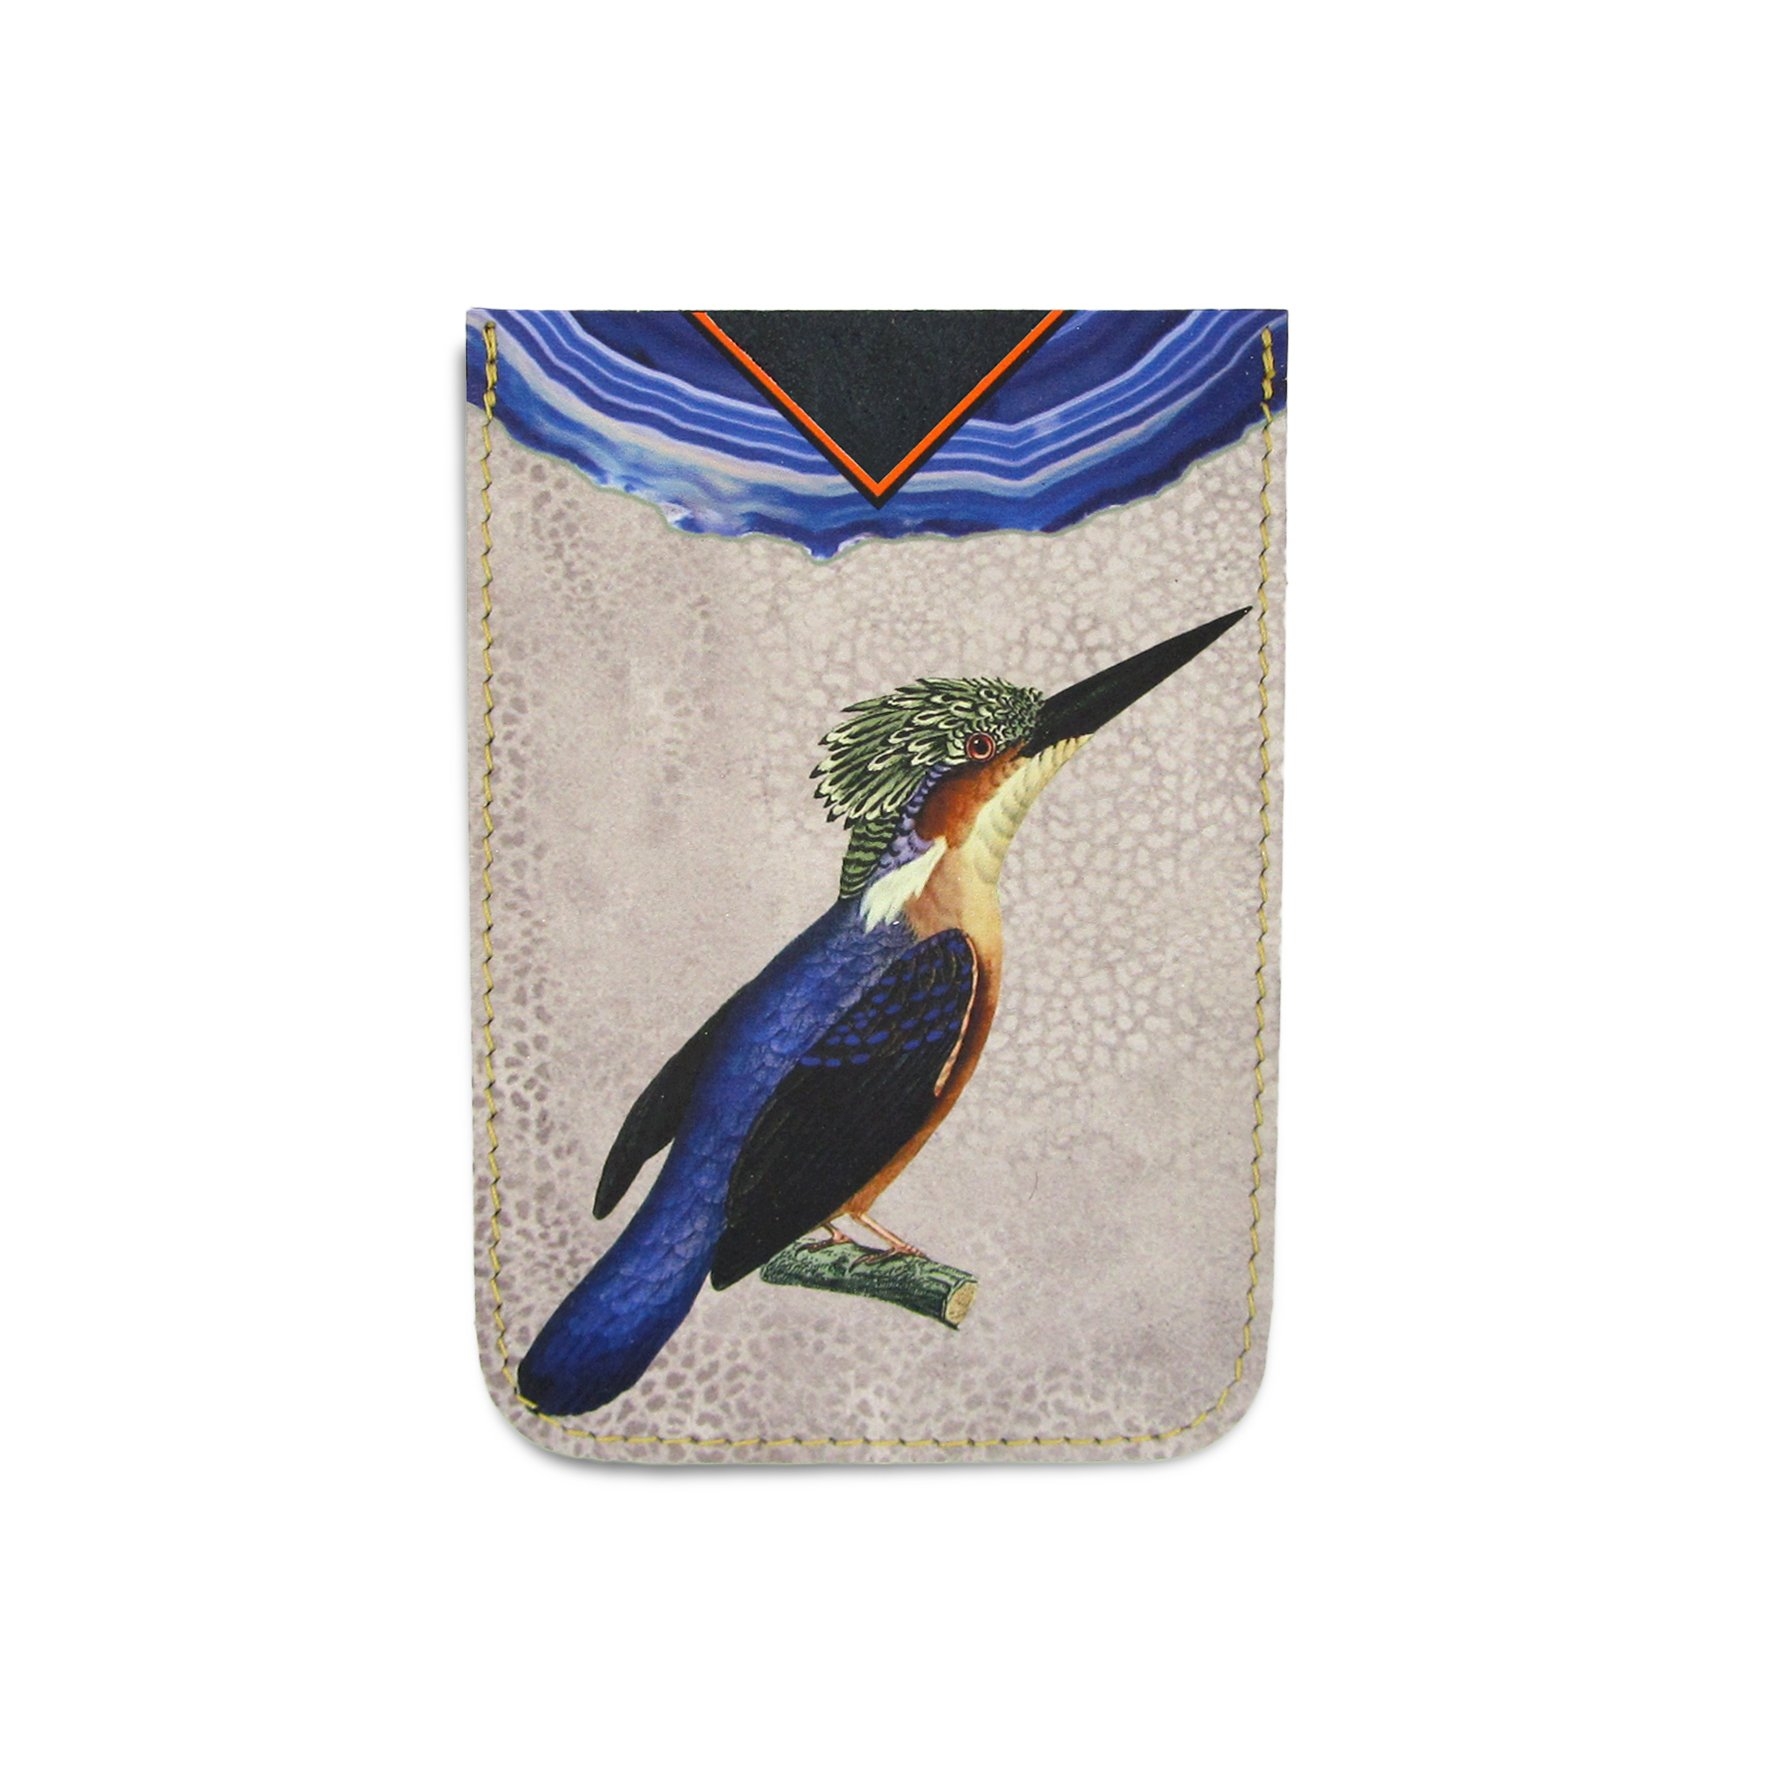 Leather Card Holder / Phone Sticker Wallet Pocket – Kingfisher – Standard Card Holder / Without personalisation / Blue